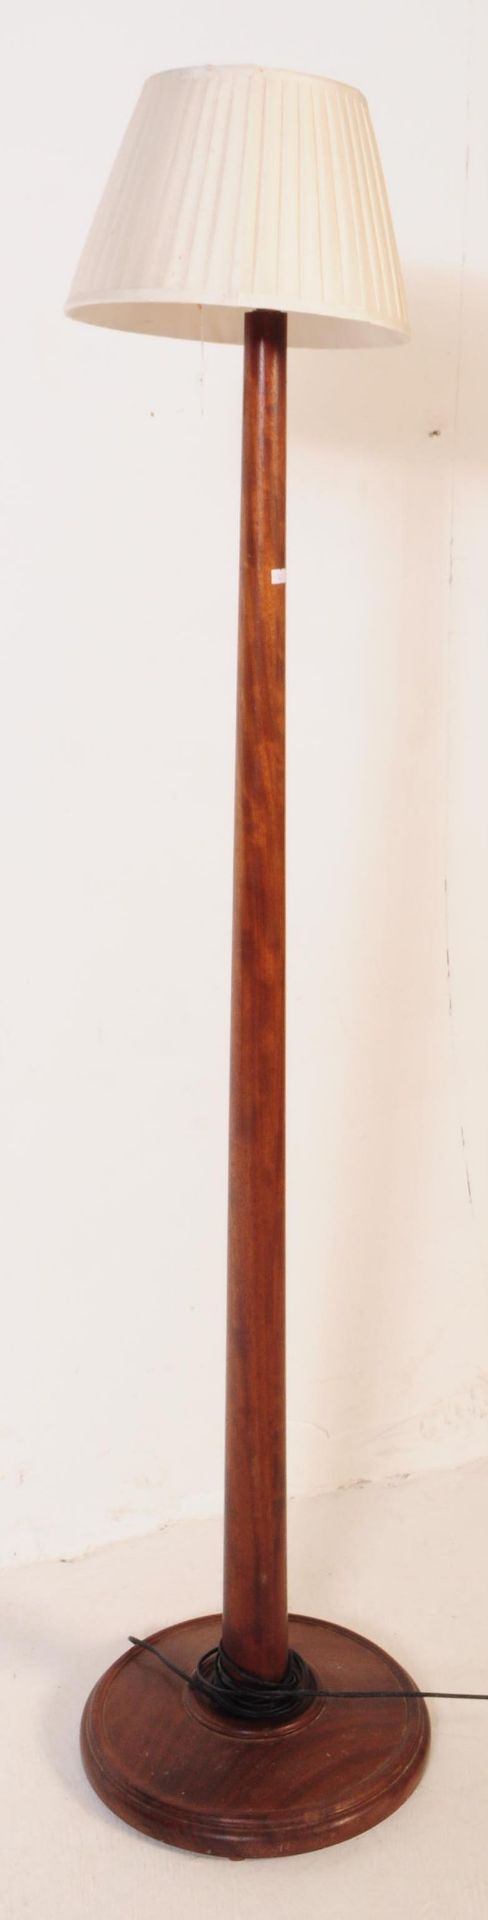 19TH CENTURY VICTORIAN MAHOGANY STANDARD LAMP - Image 4 of 6